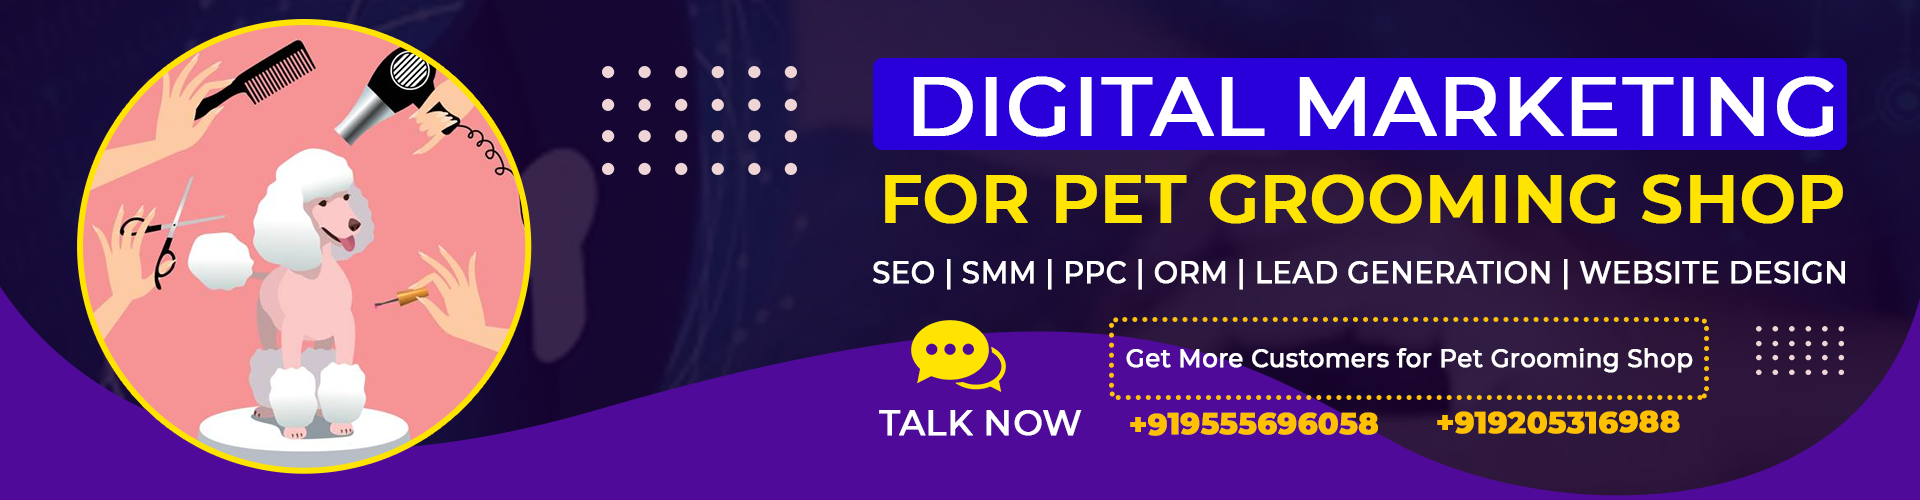 digital-marketing-for-pet-grooming-shop